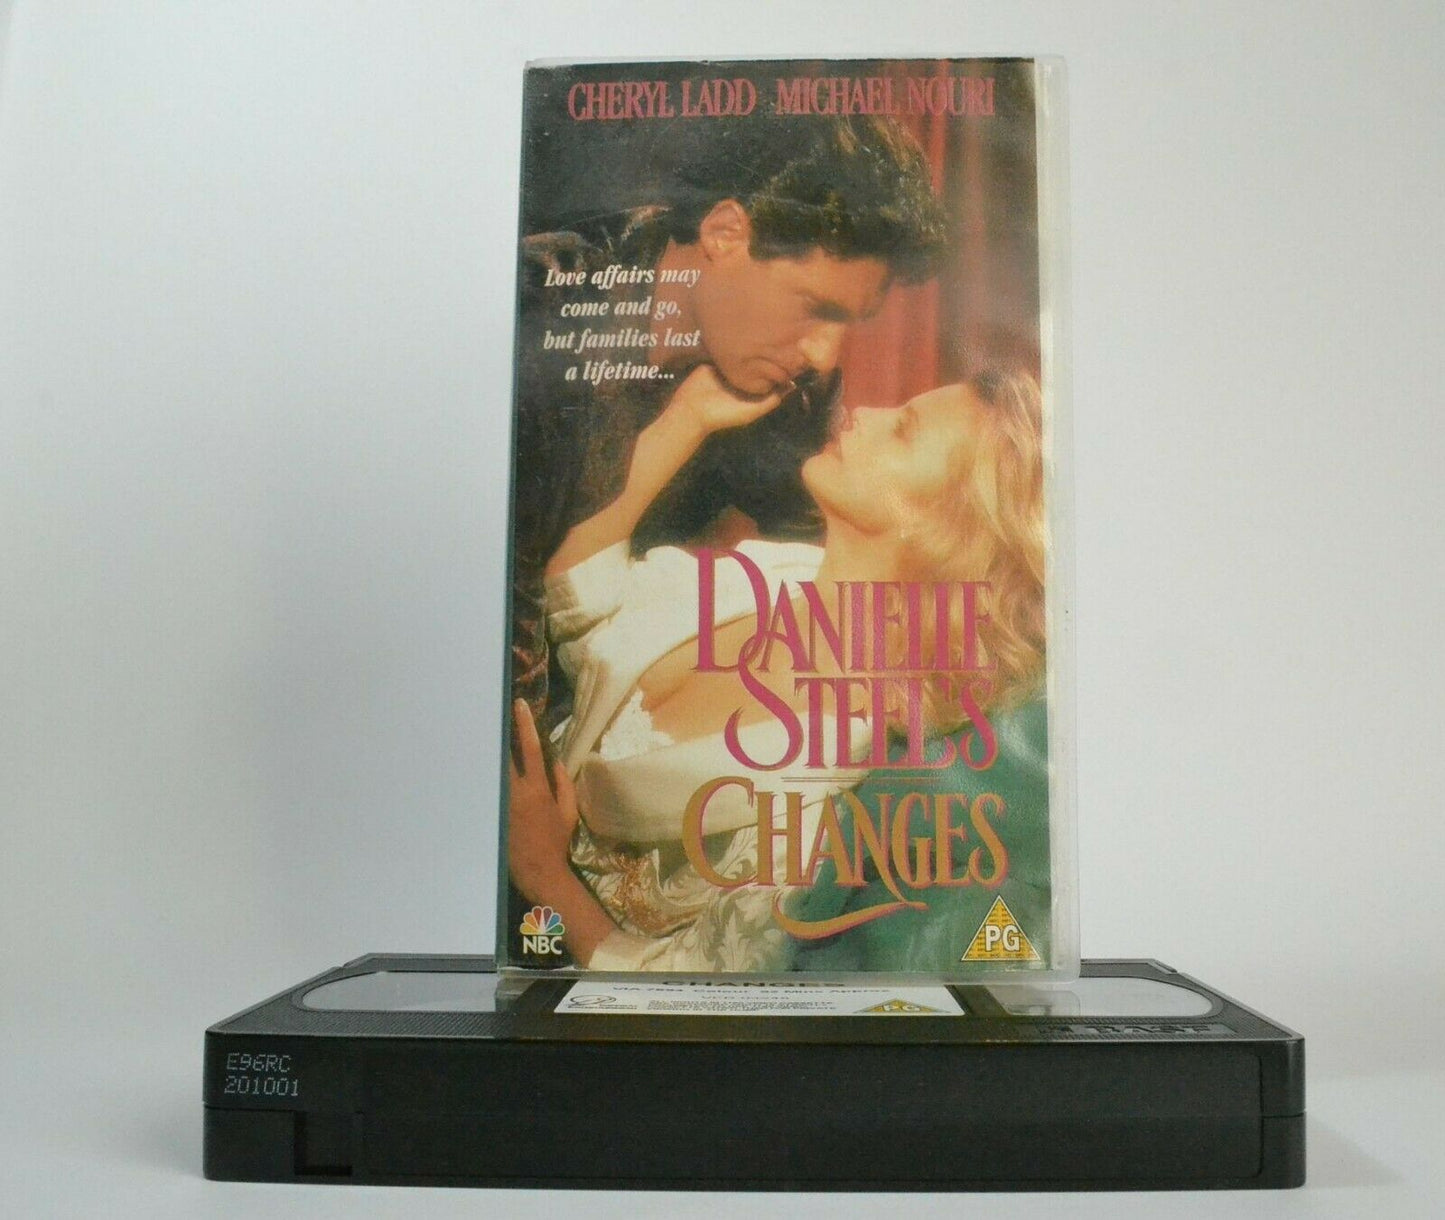 Changes: Romantic Drama [Danielle Steel] Cheryl Ladd / Michael Nouri - Pal VHS-